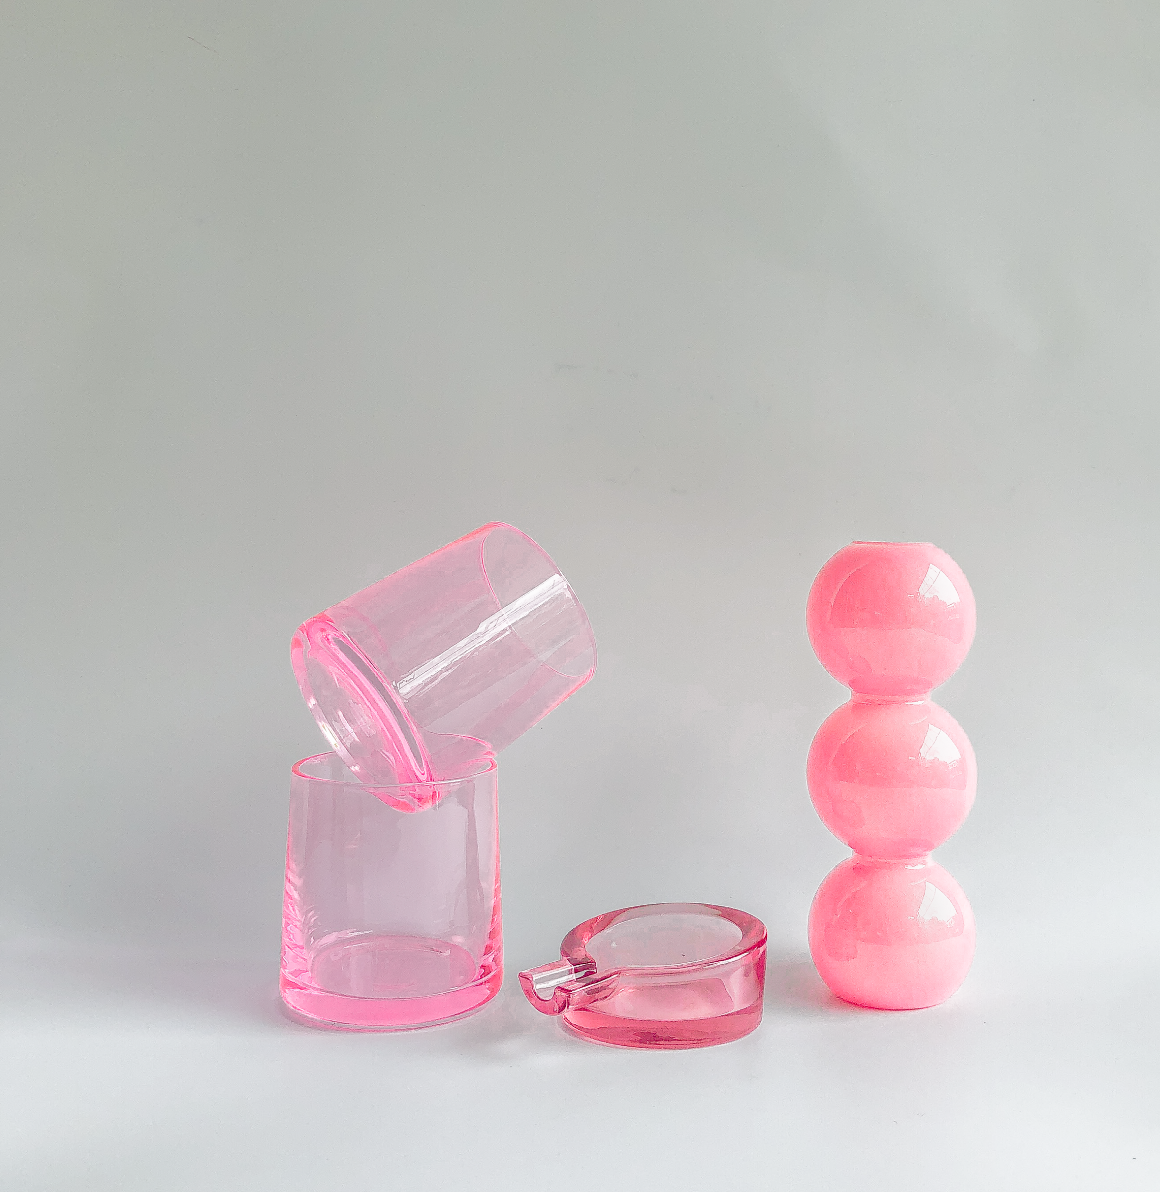 The Pink Bubble Vase by PROSE Botanical